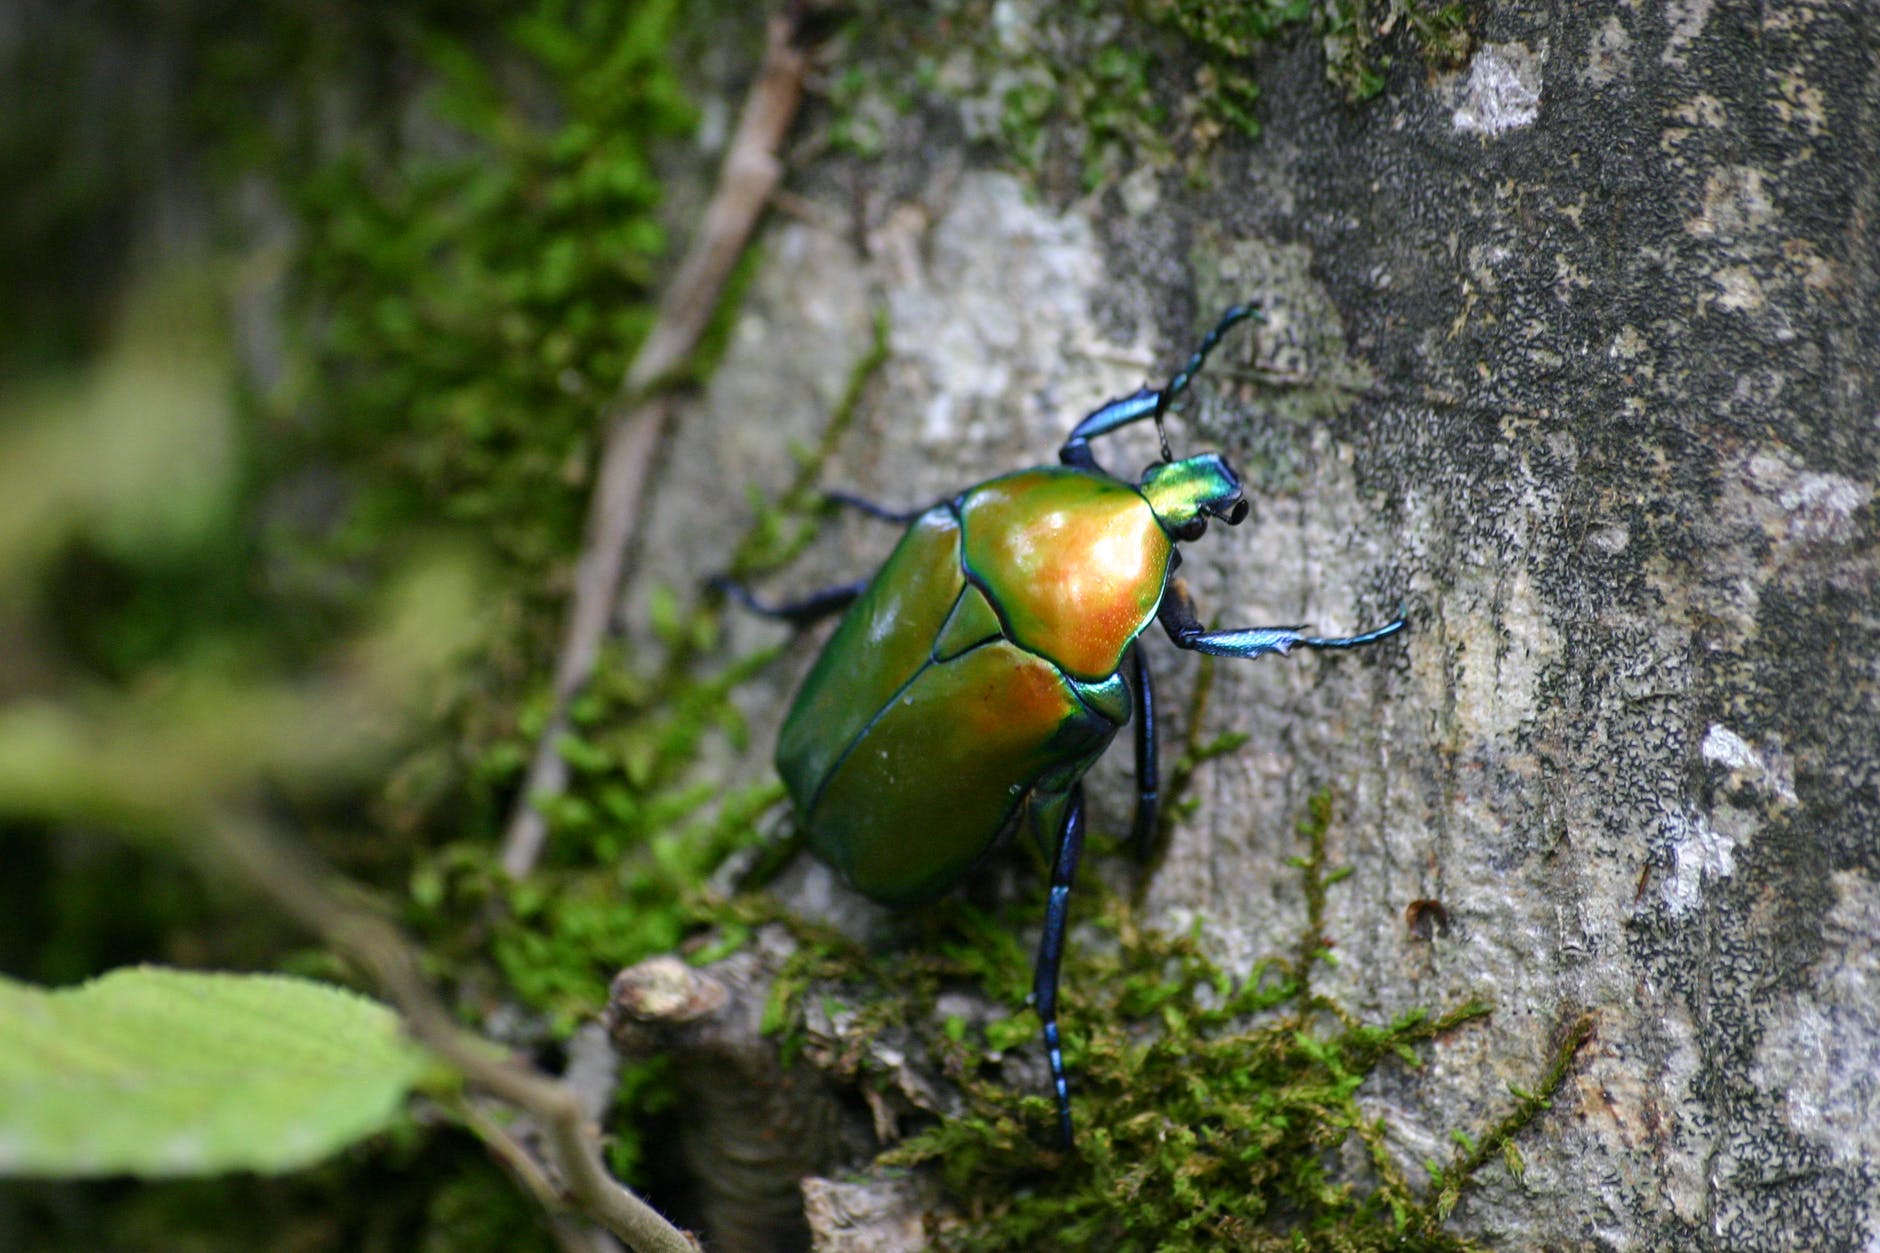 green june beetle on tree bark with green mosh in closeup photo